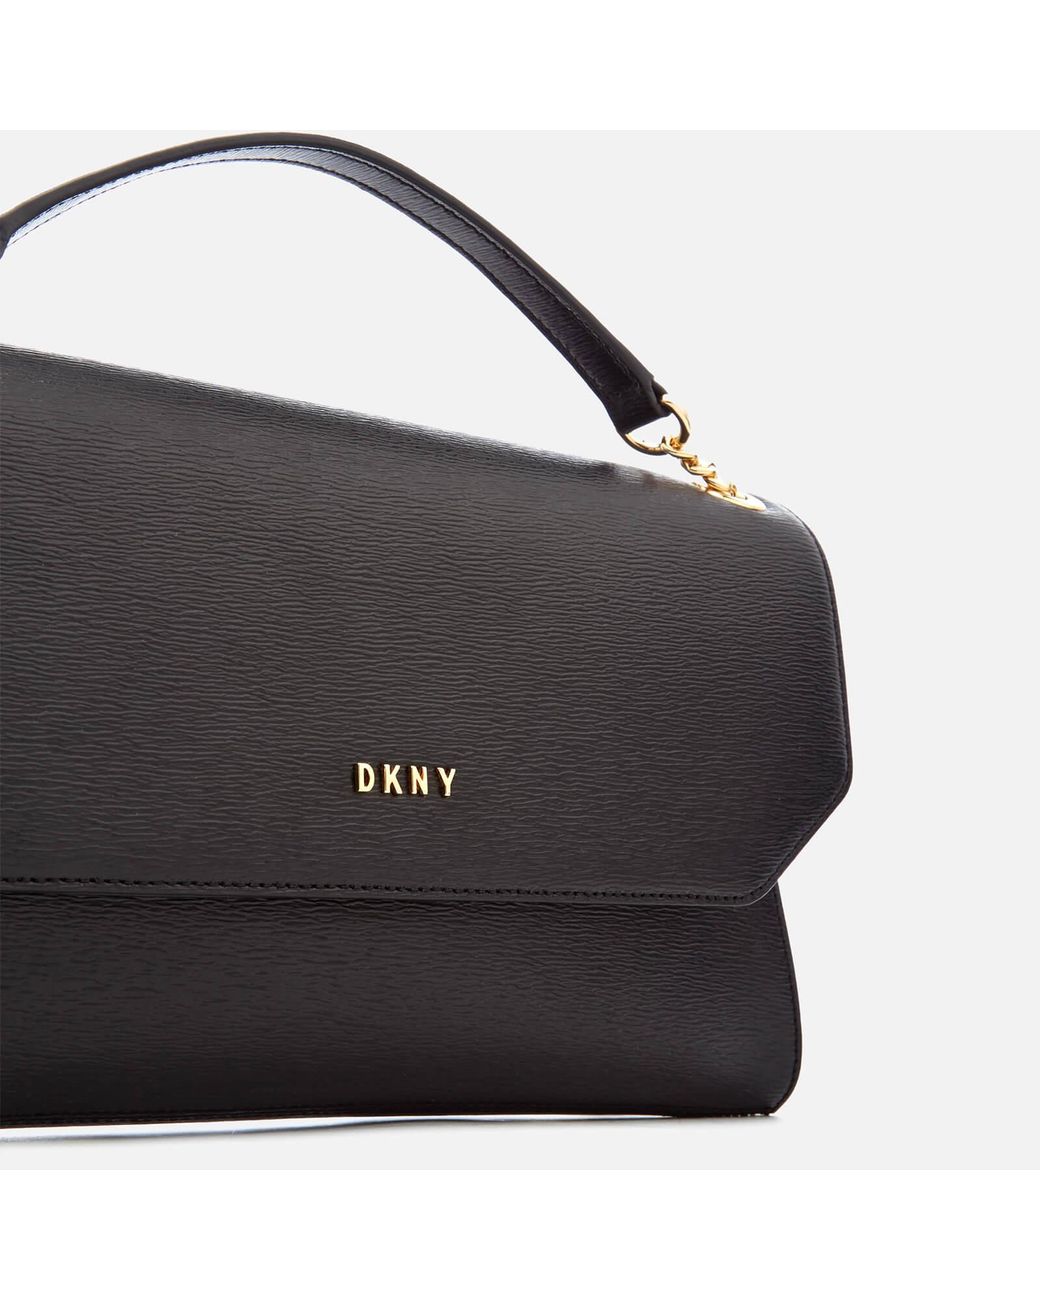 DKNY Bryant Envelope Clutch Bag in Black | Lyst Australia